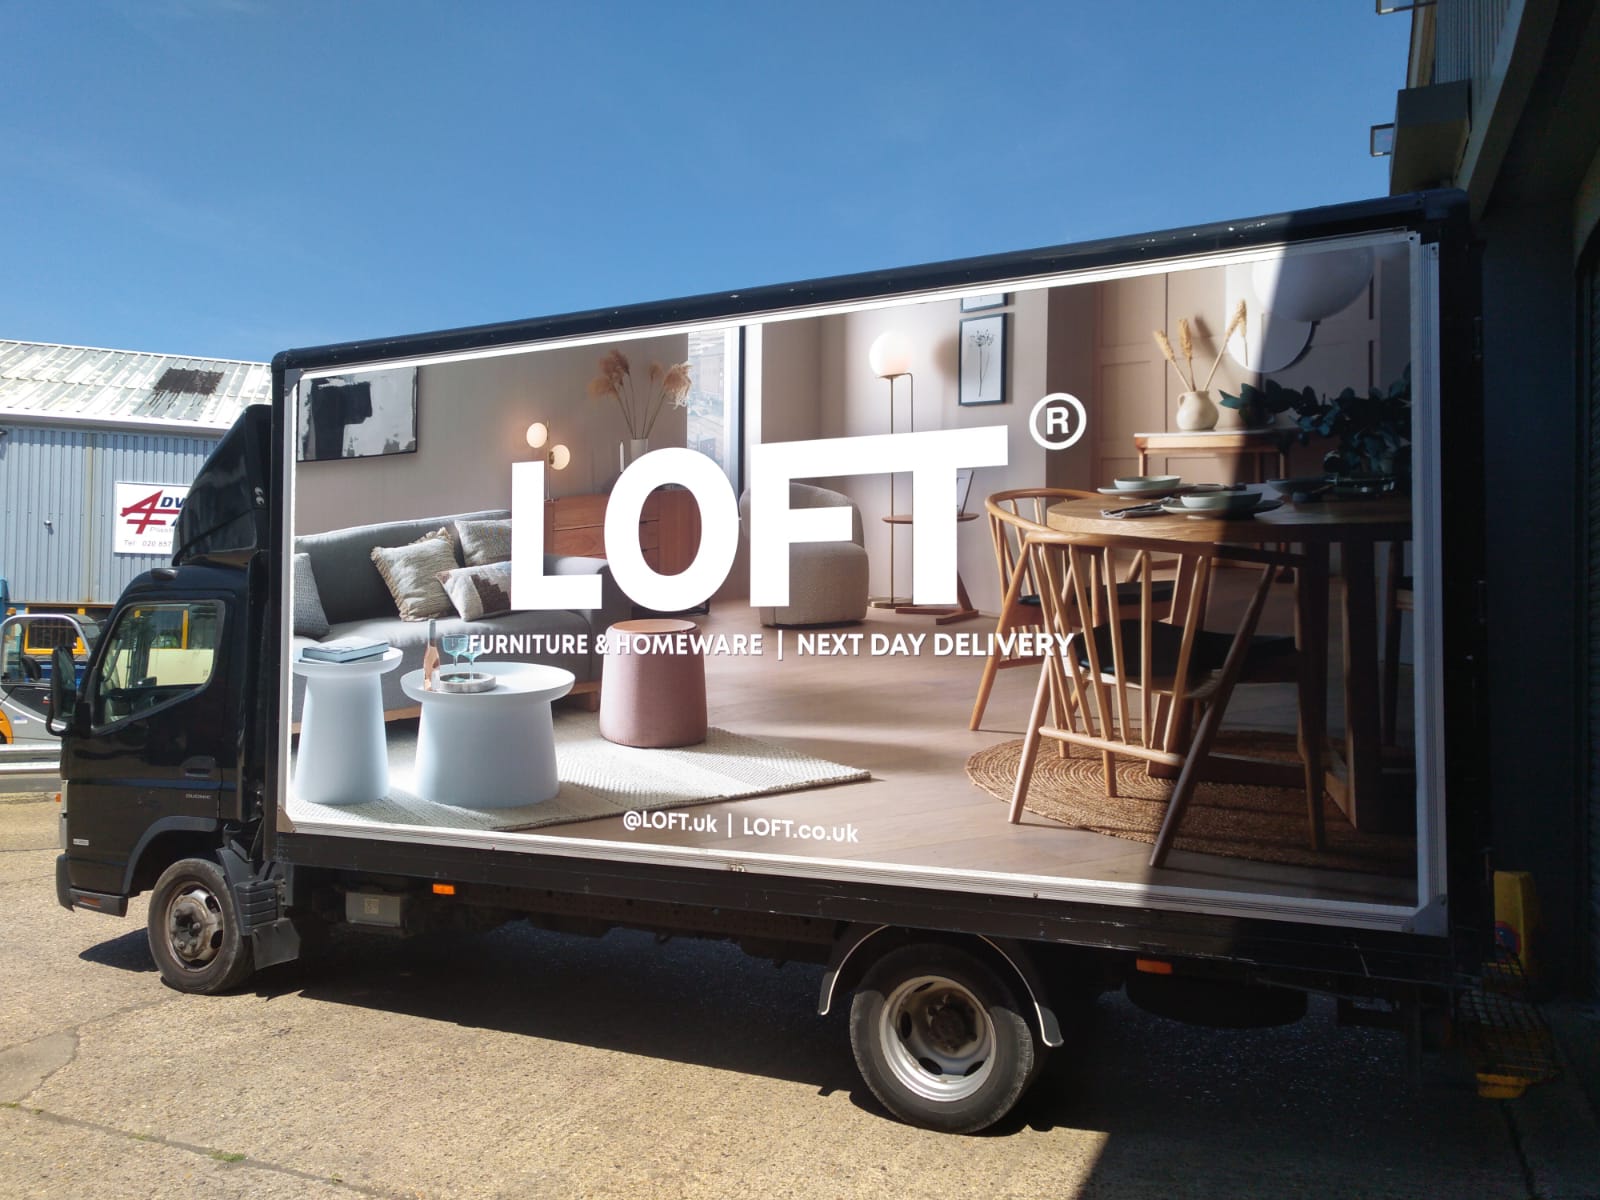 LOFT Interiors Delivery Van Advertising